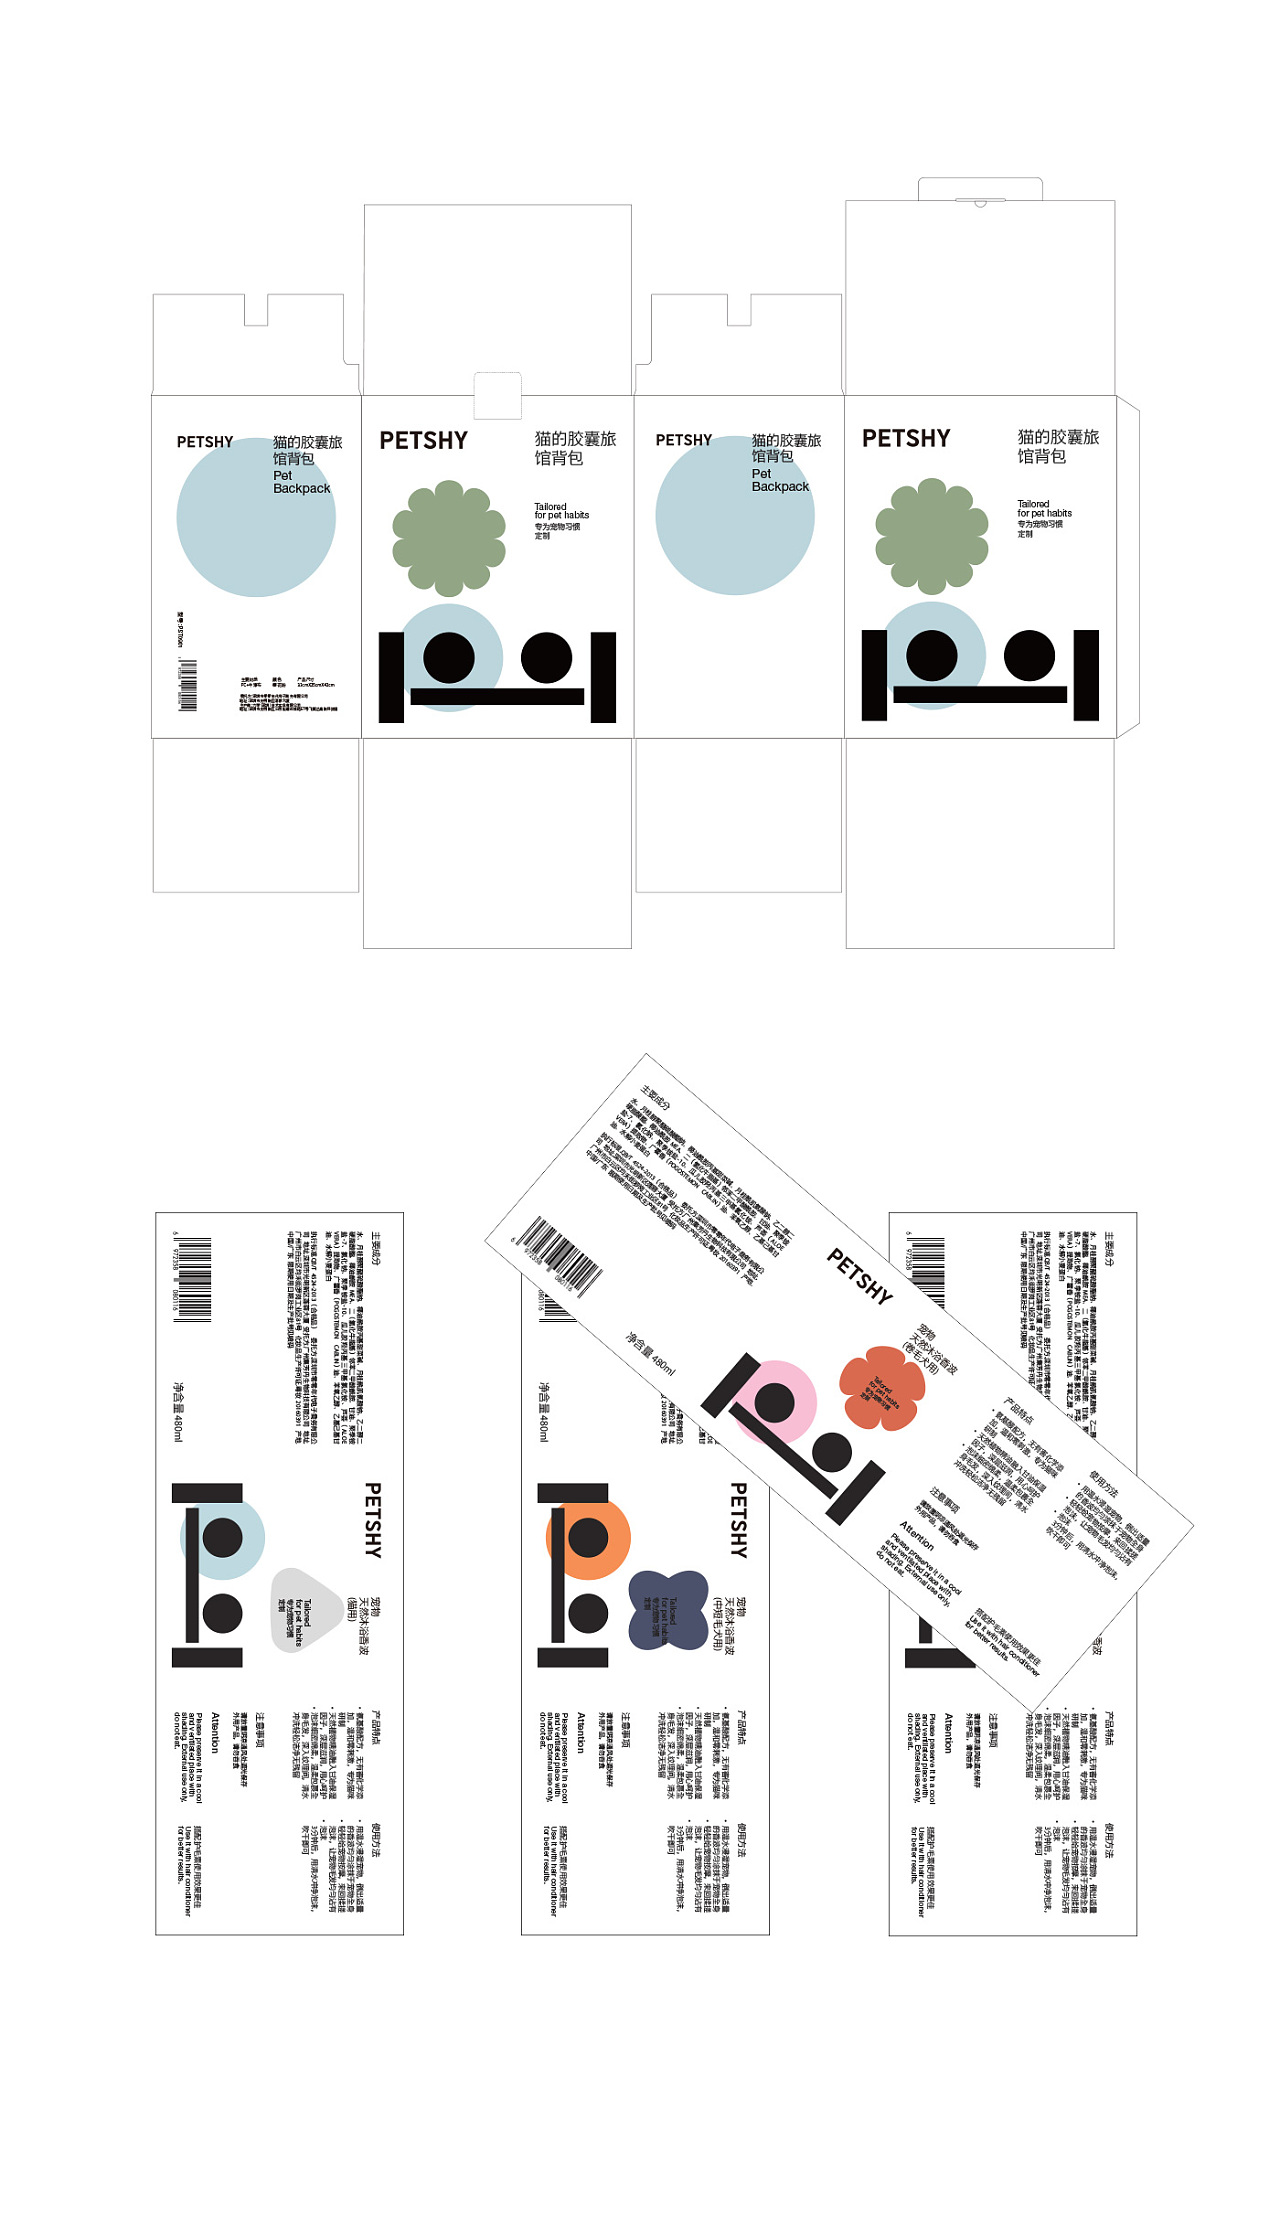 PETSHY Visual Identity & Packaging Design